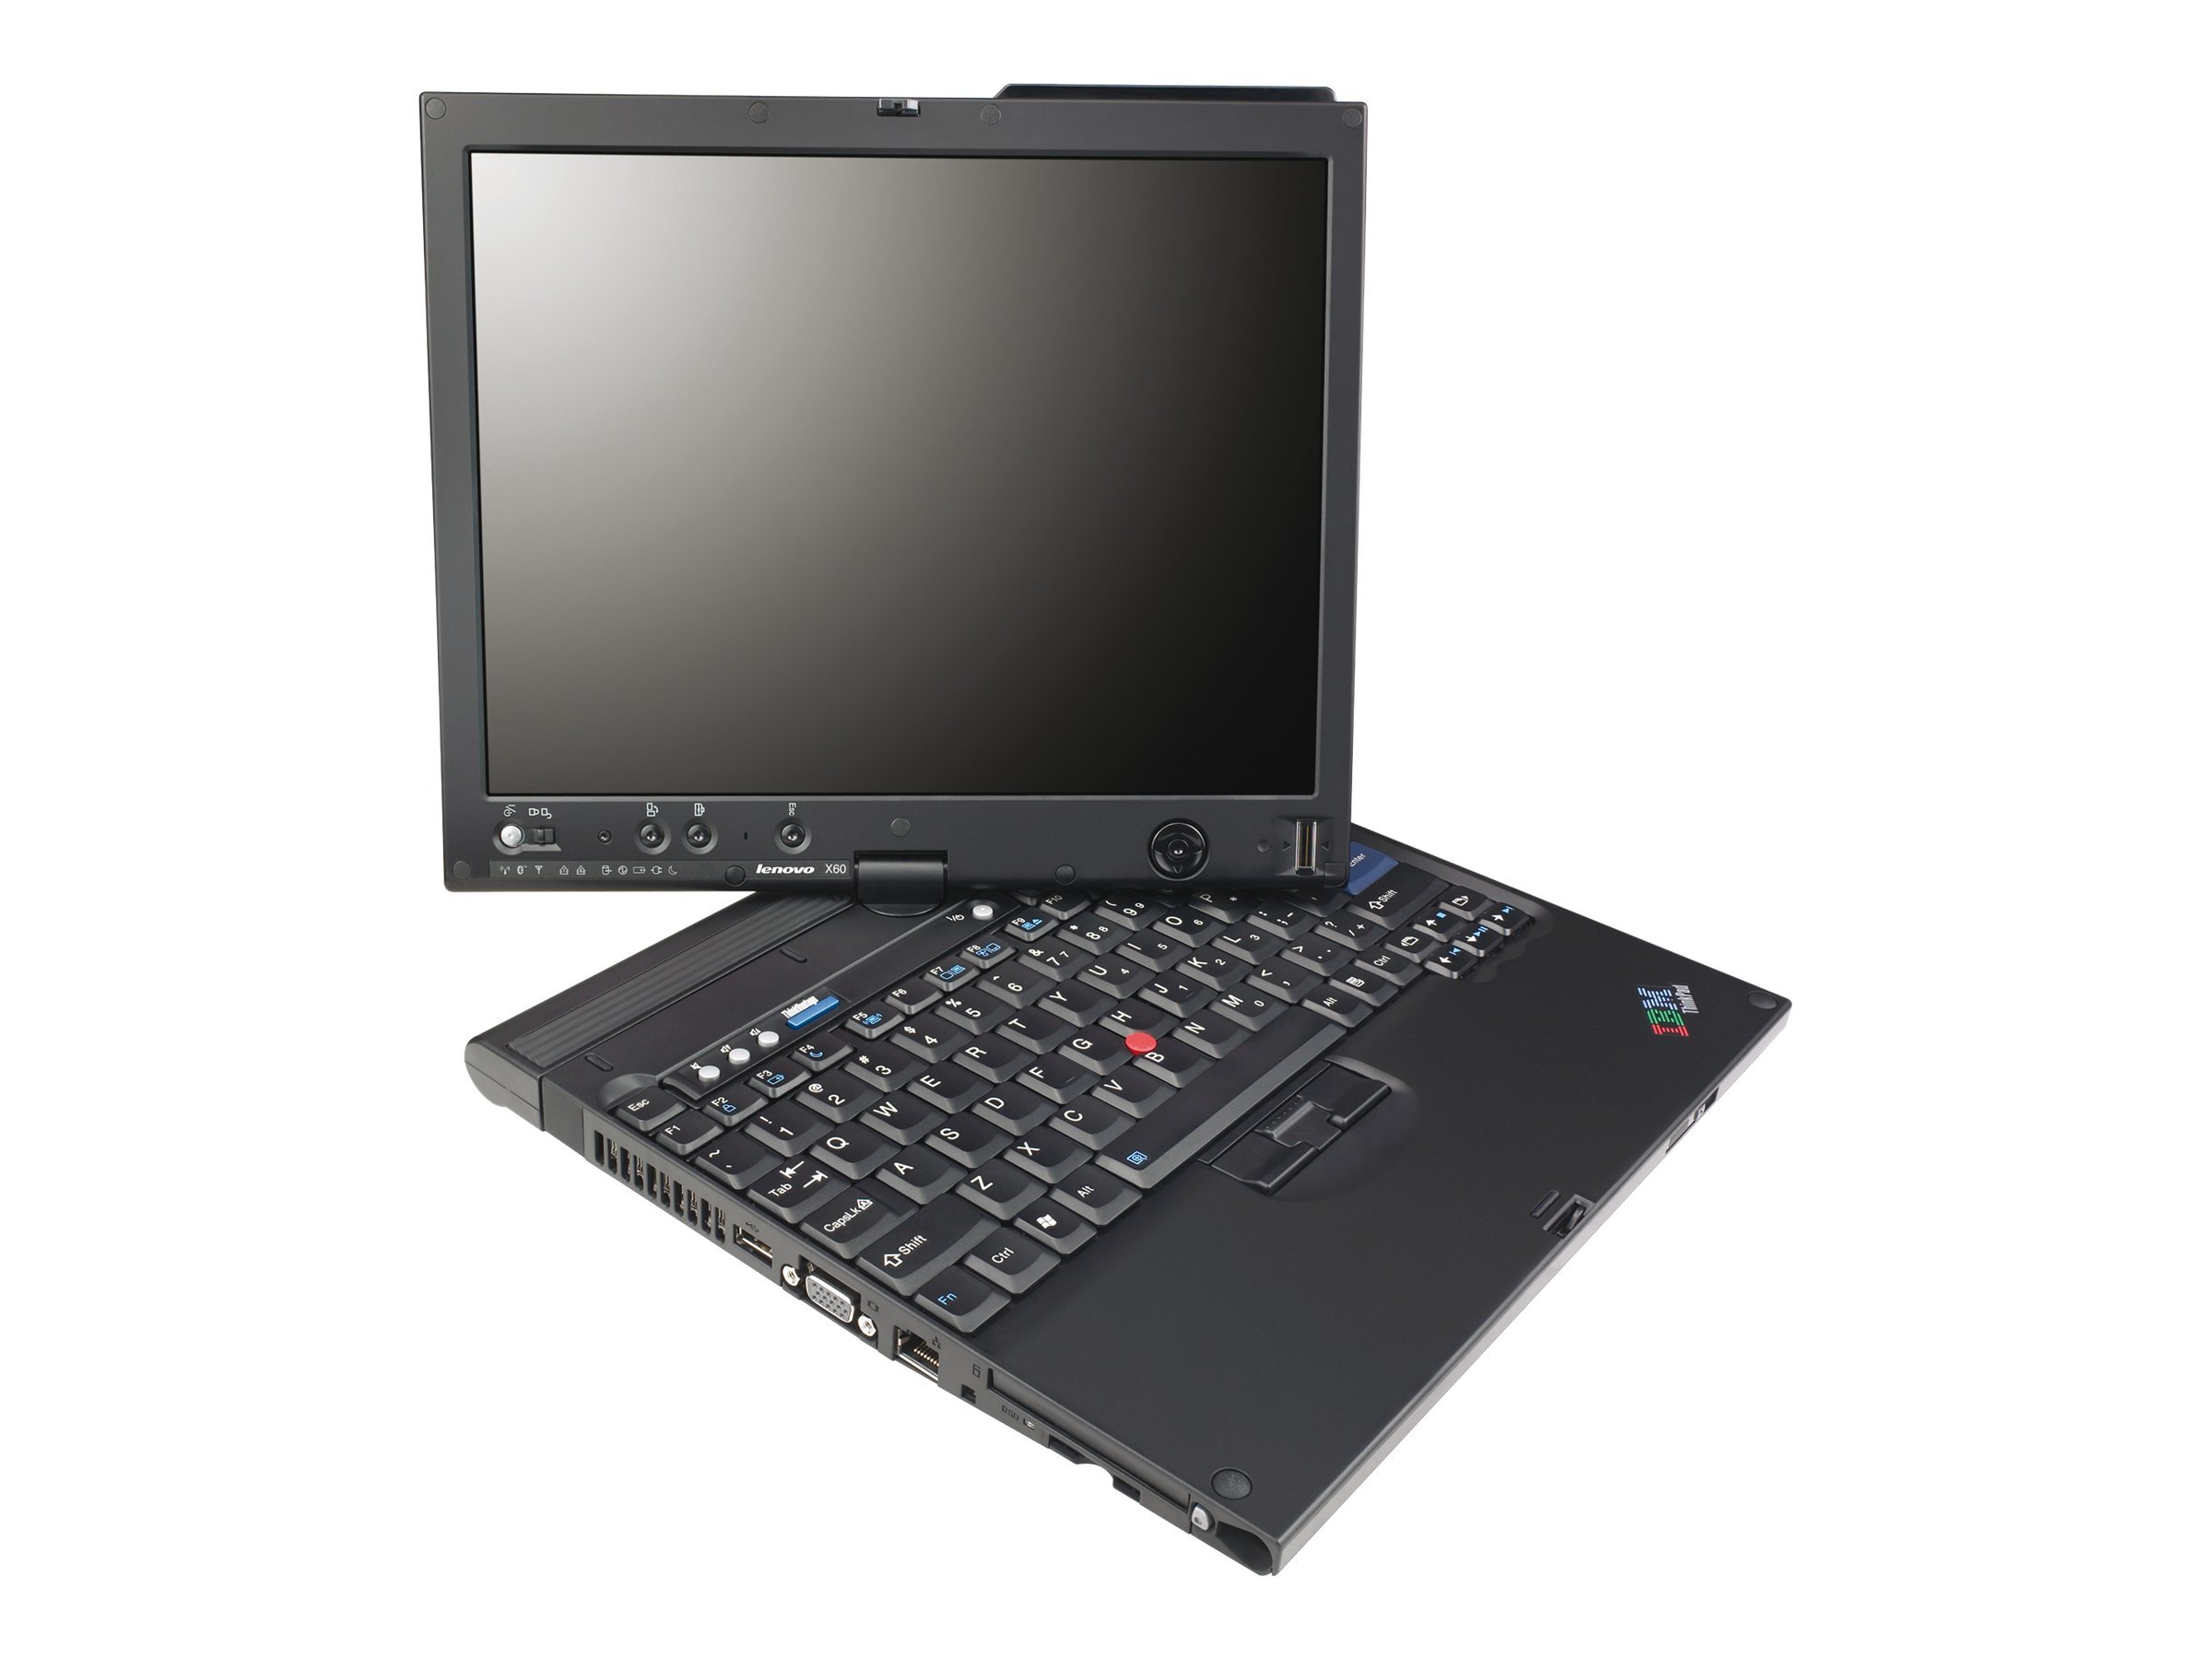 Lenovo ThinkPad X60 Tablet (6363)